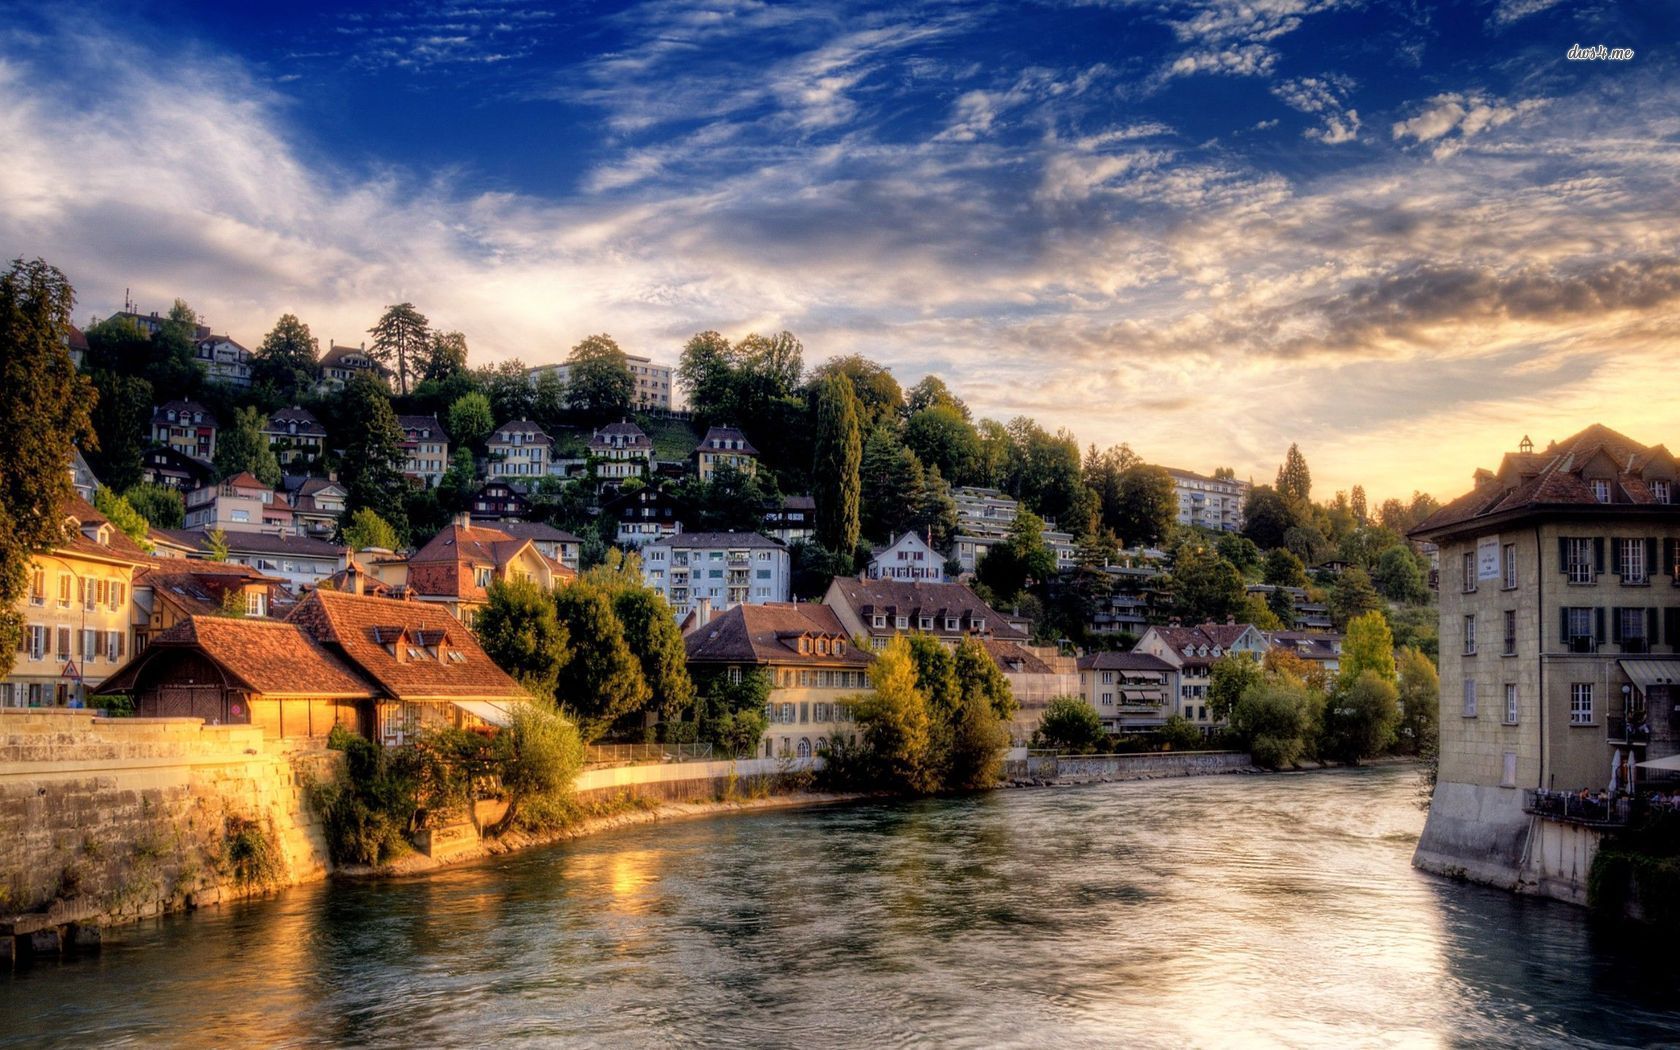 Bern, Switzerland wallpaper - World wallpapers - #27744